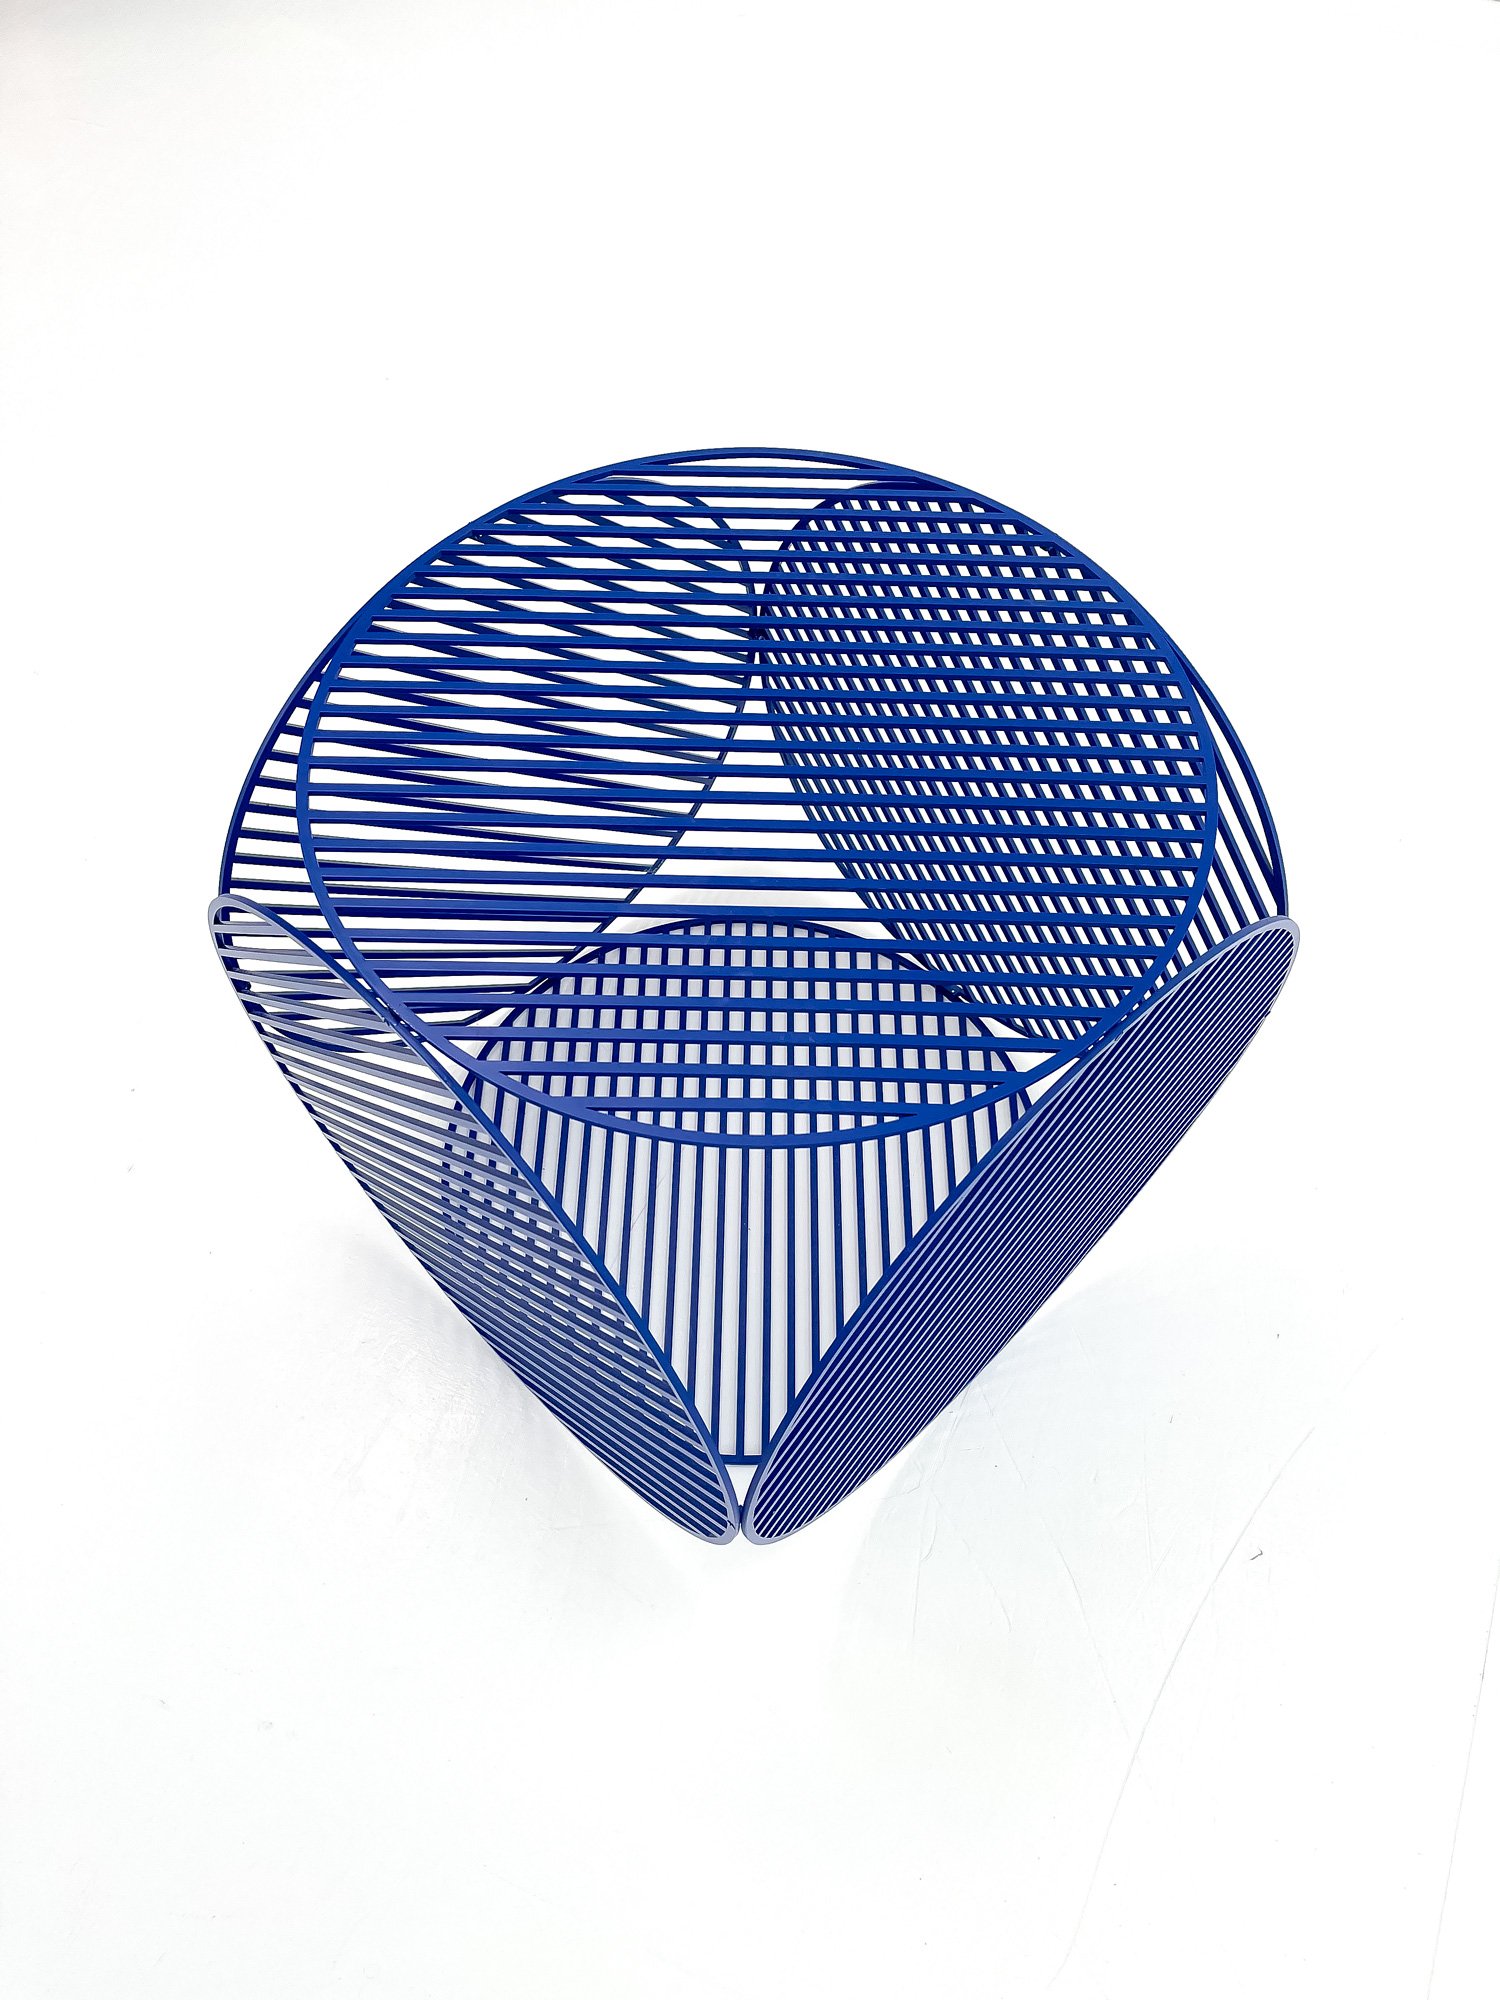 Studio-Roso_Cube Table Steel.jpg